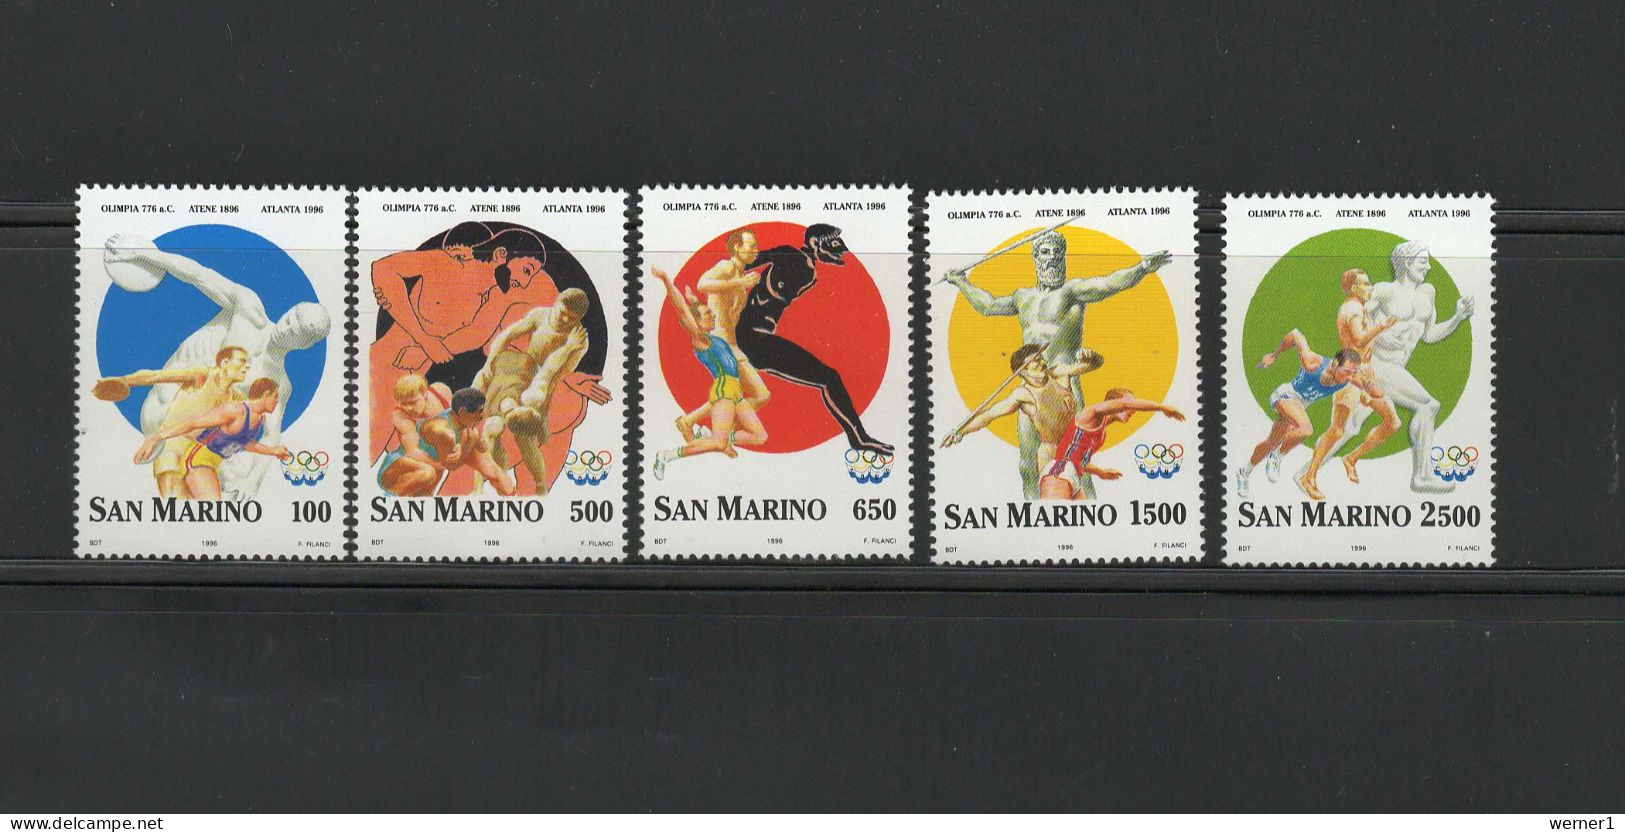 San Marino 1996 Olympic Games Atlanta, Set Of 5 MNH - Verano 1996: Atlanta